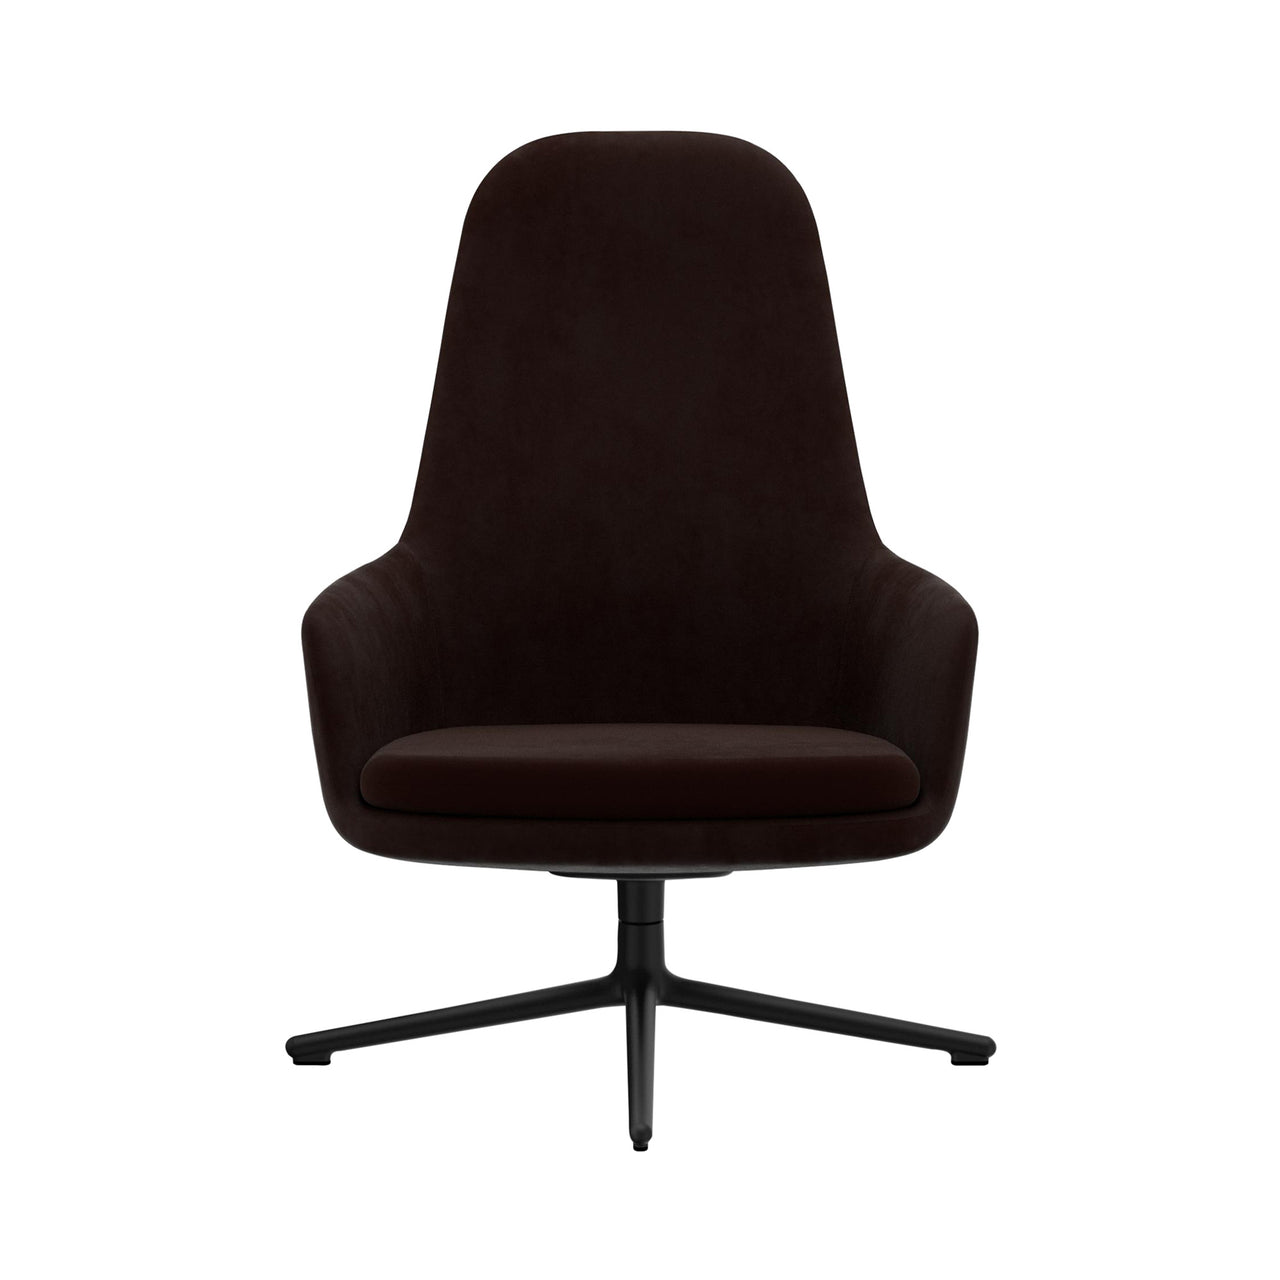 Era Lounge Chair Swivel: High + Black Aluminum